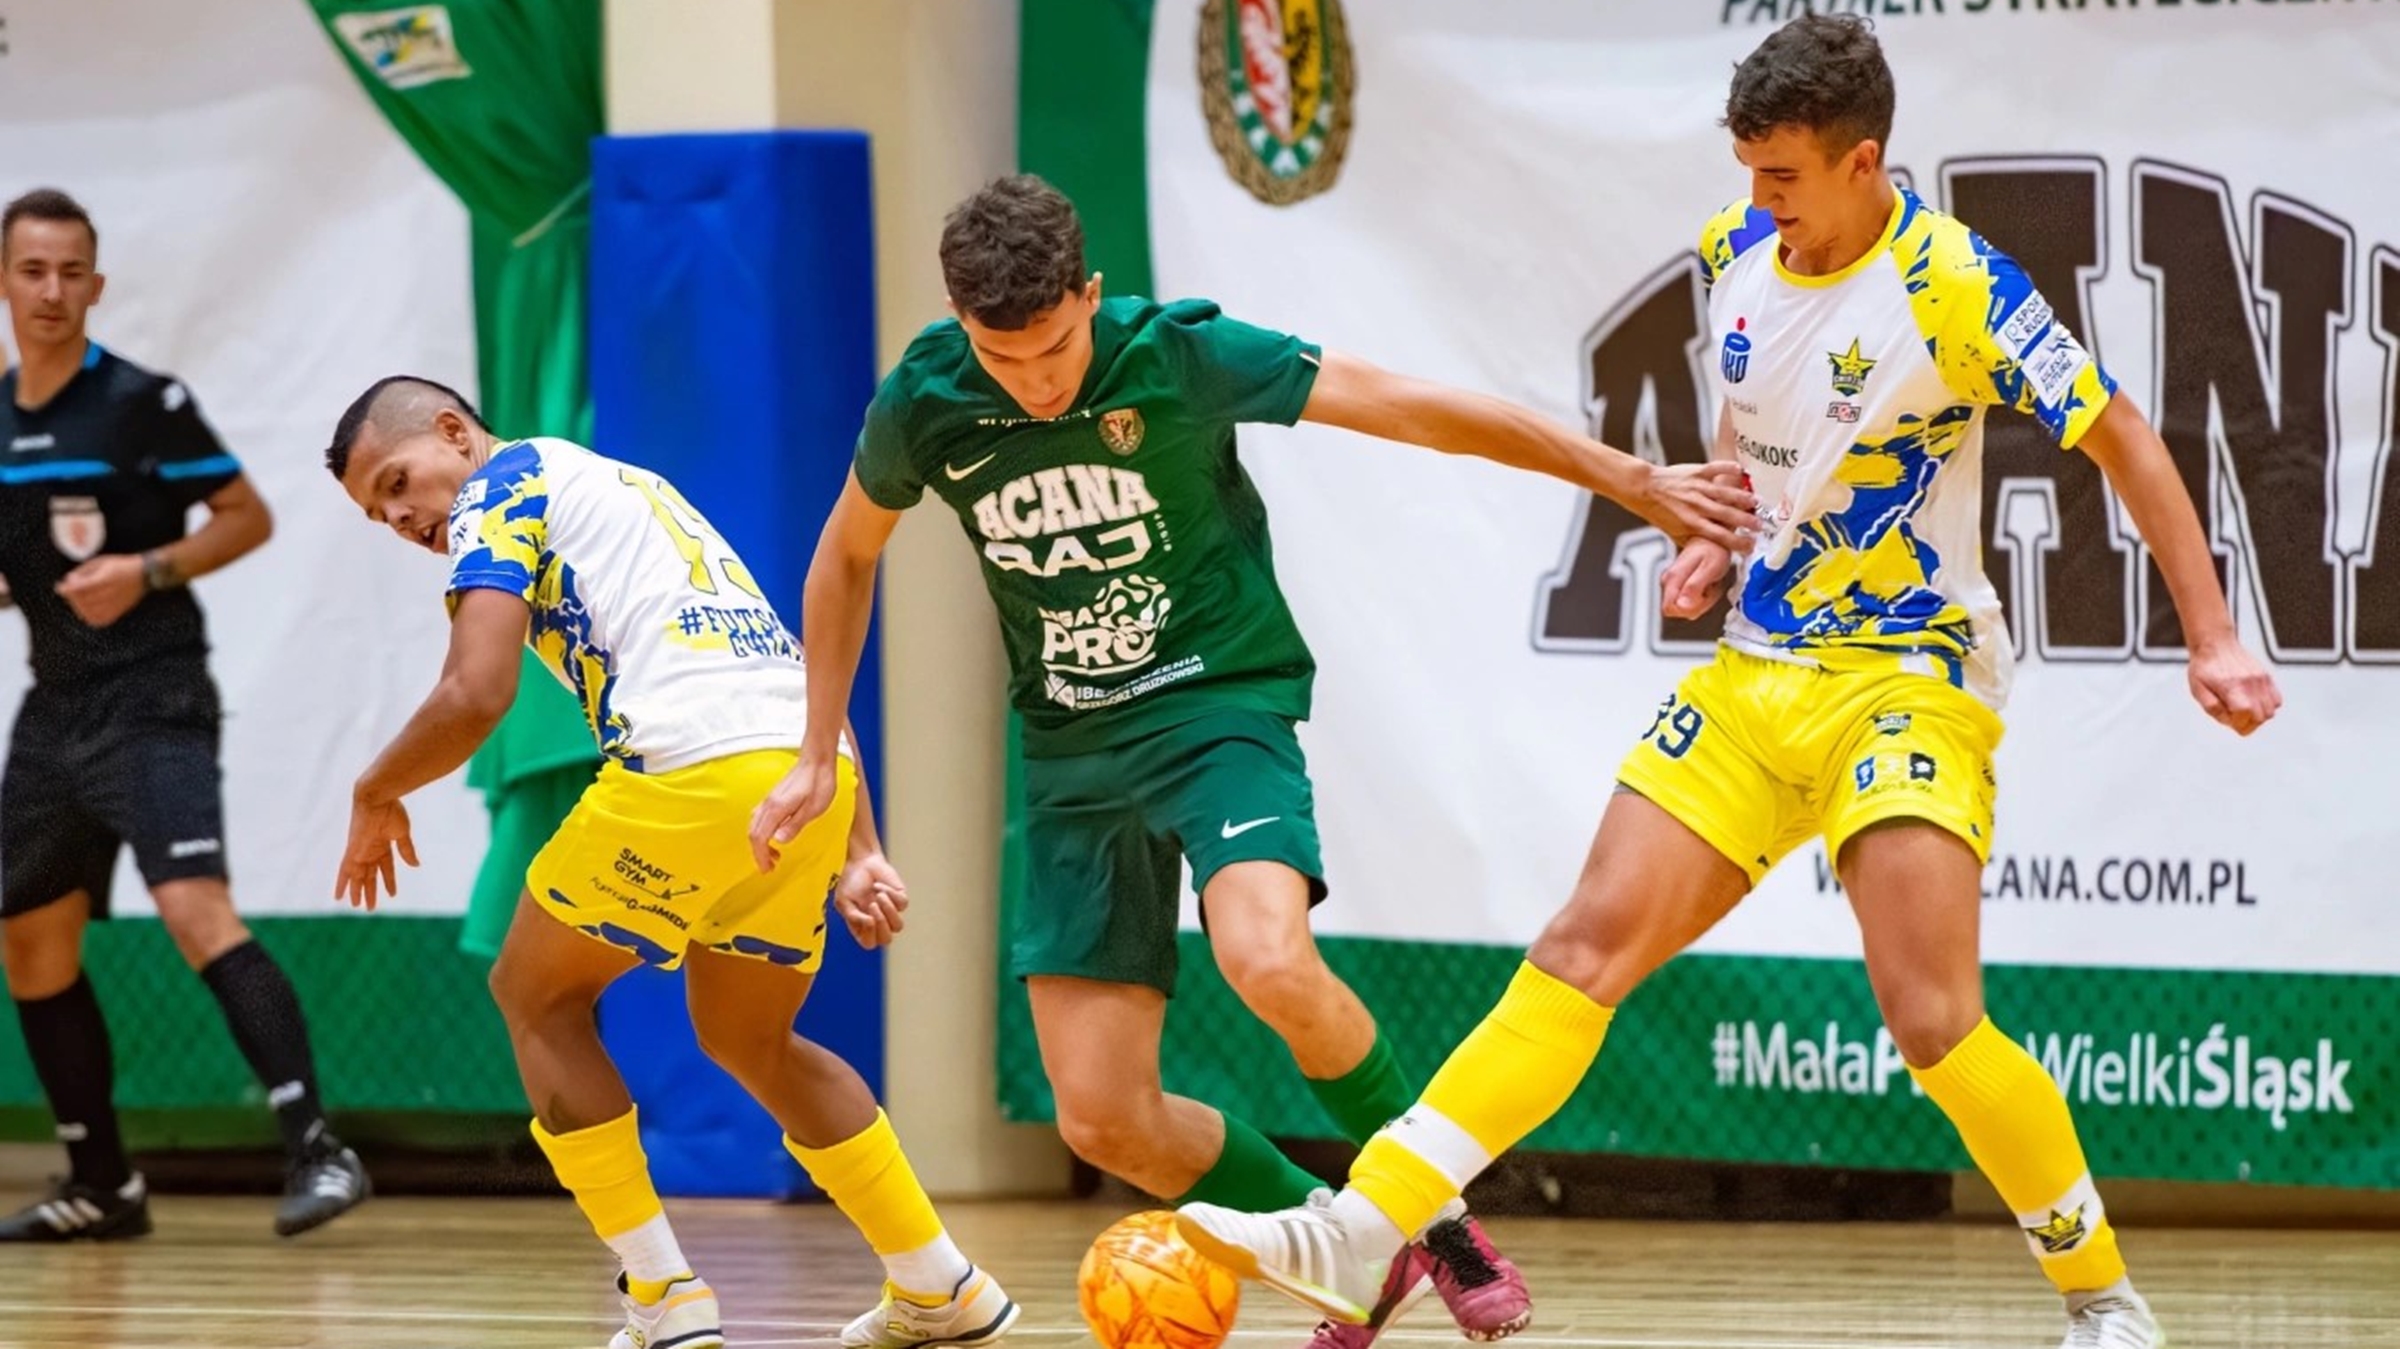 uploads/images/2023/9/Futsal - 5 _6511c729d5646.jpg